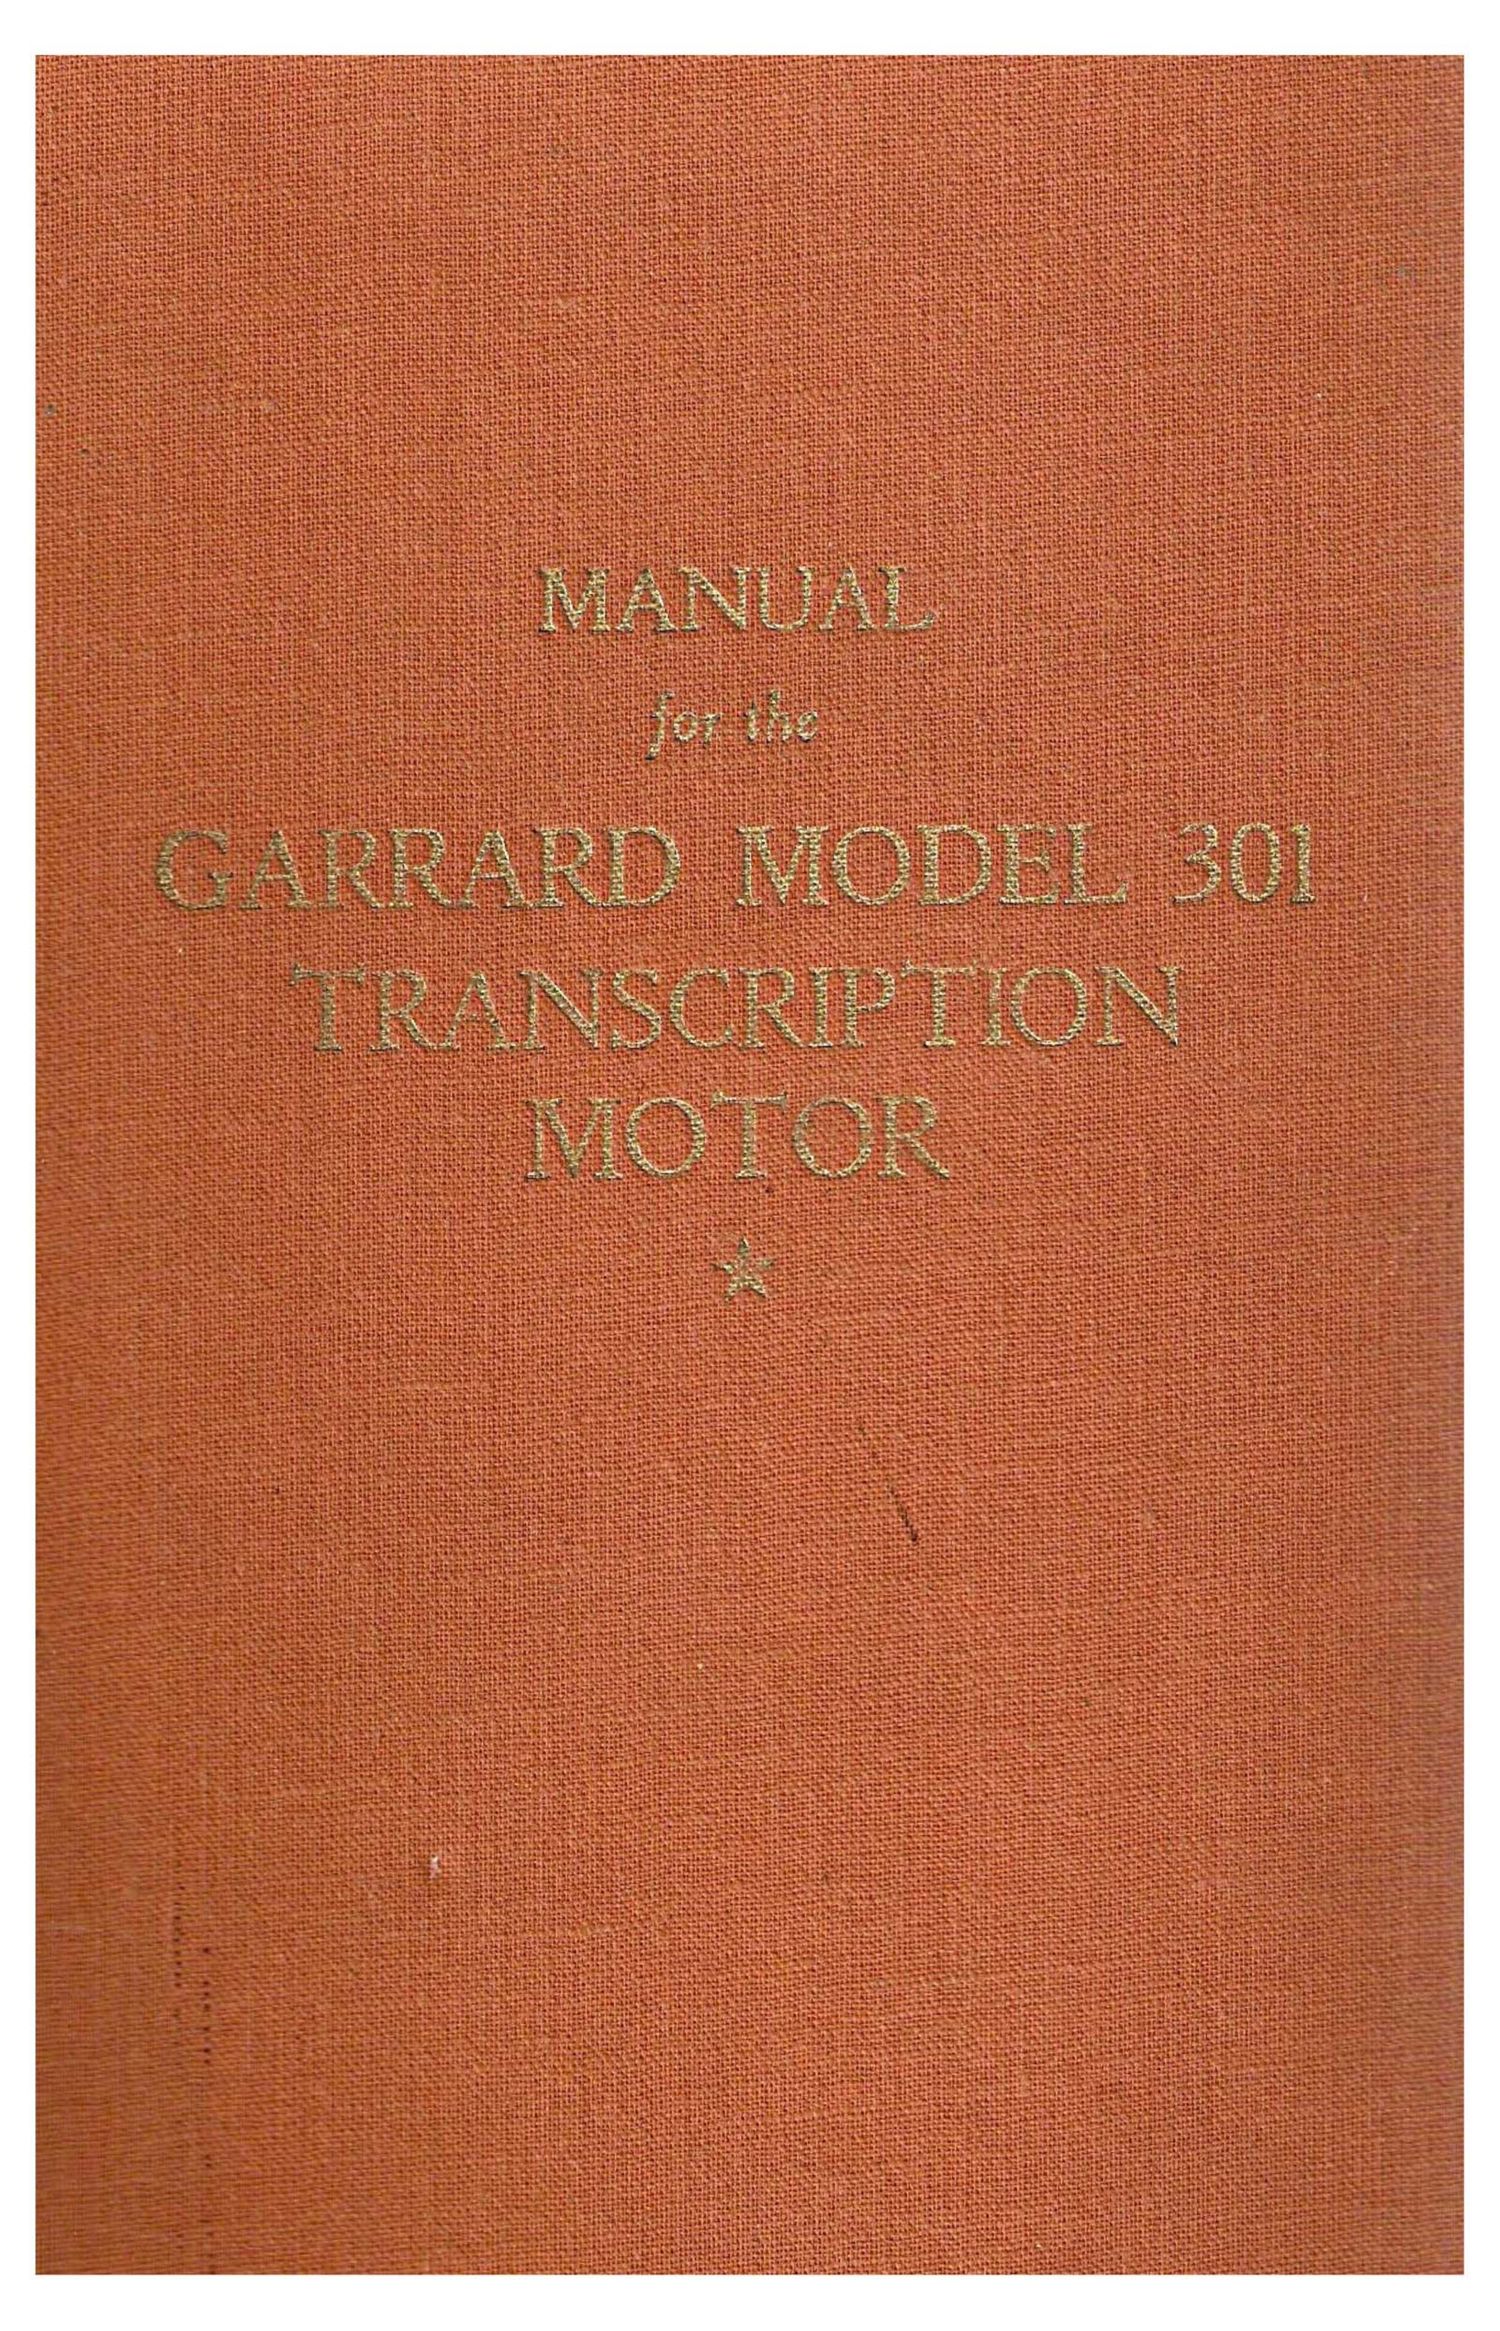 Garrard 301 Service Manual 2